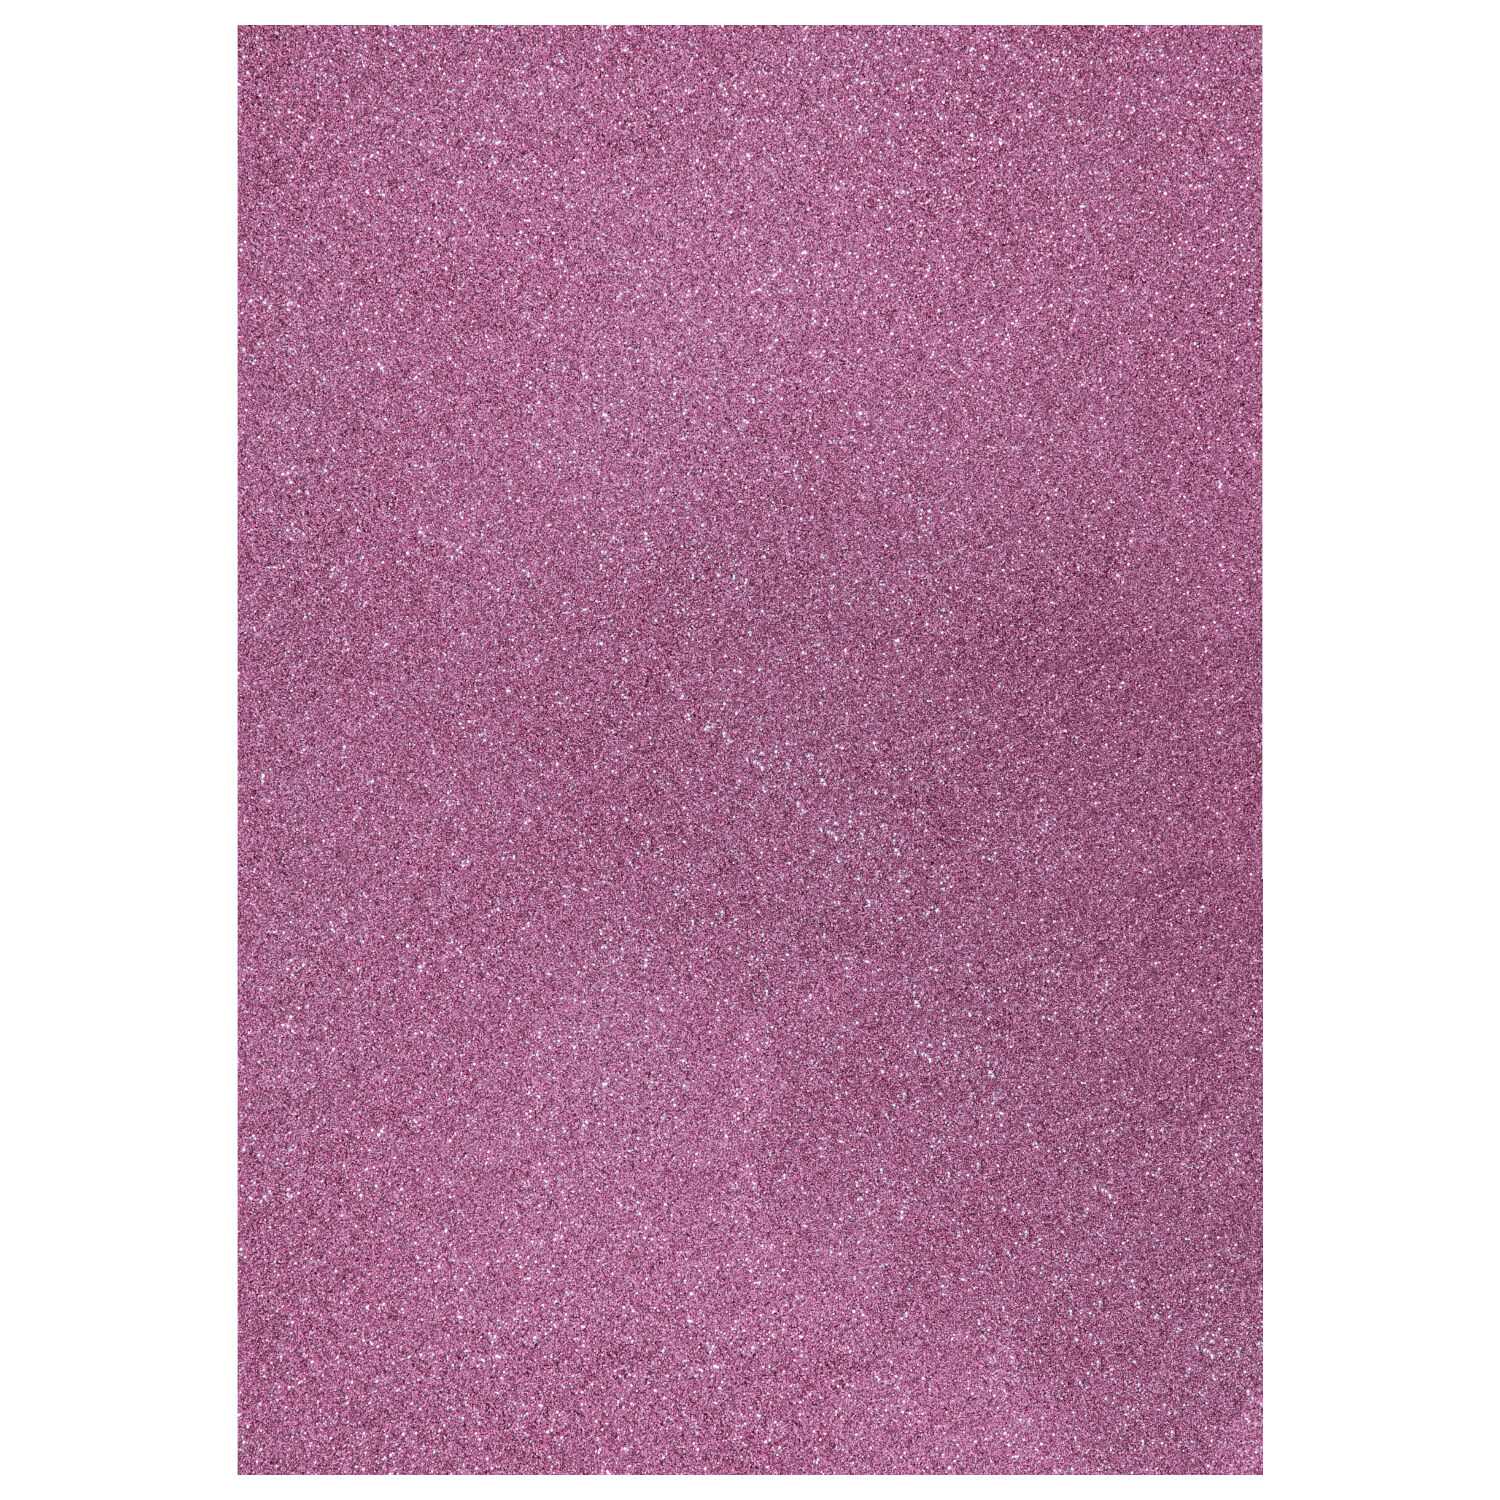 NEU Glitter-Karton, 200 g/qm, einseitig mit Glitzer, DIN A4, Lavendel